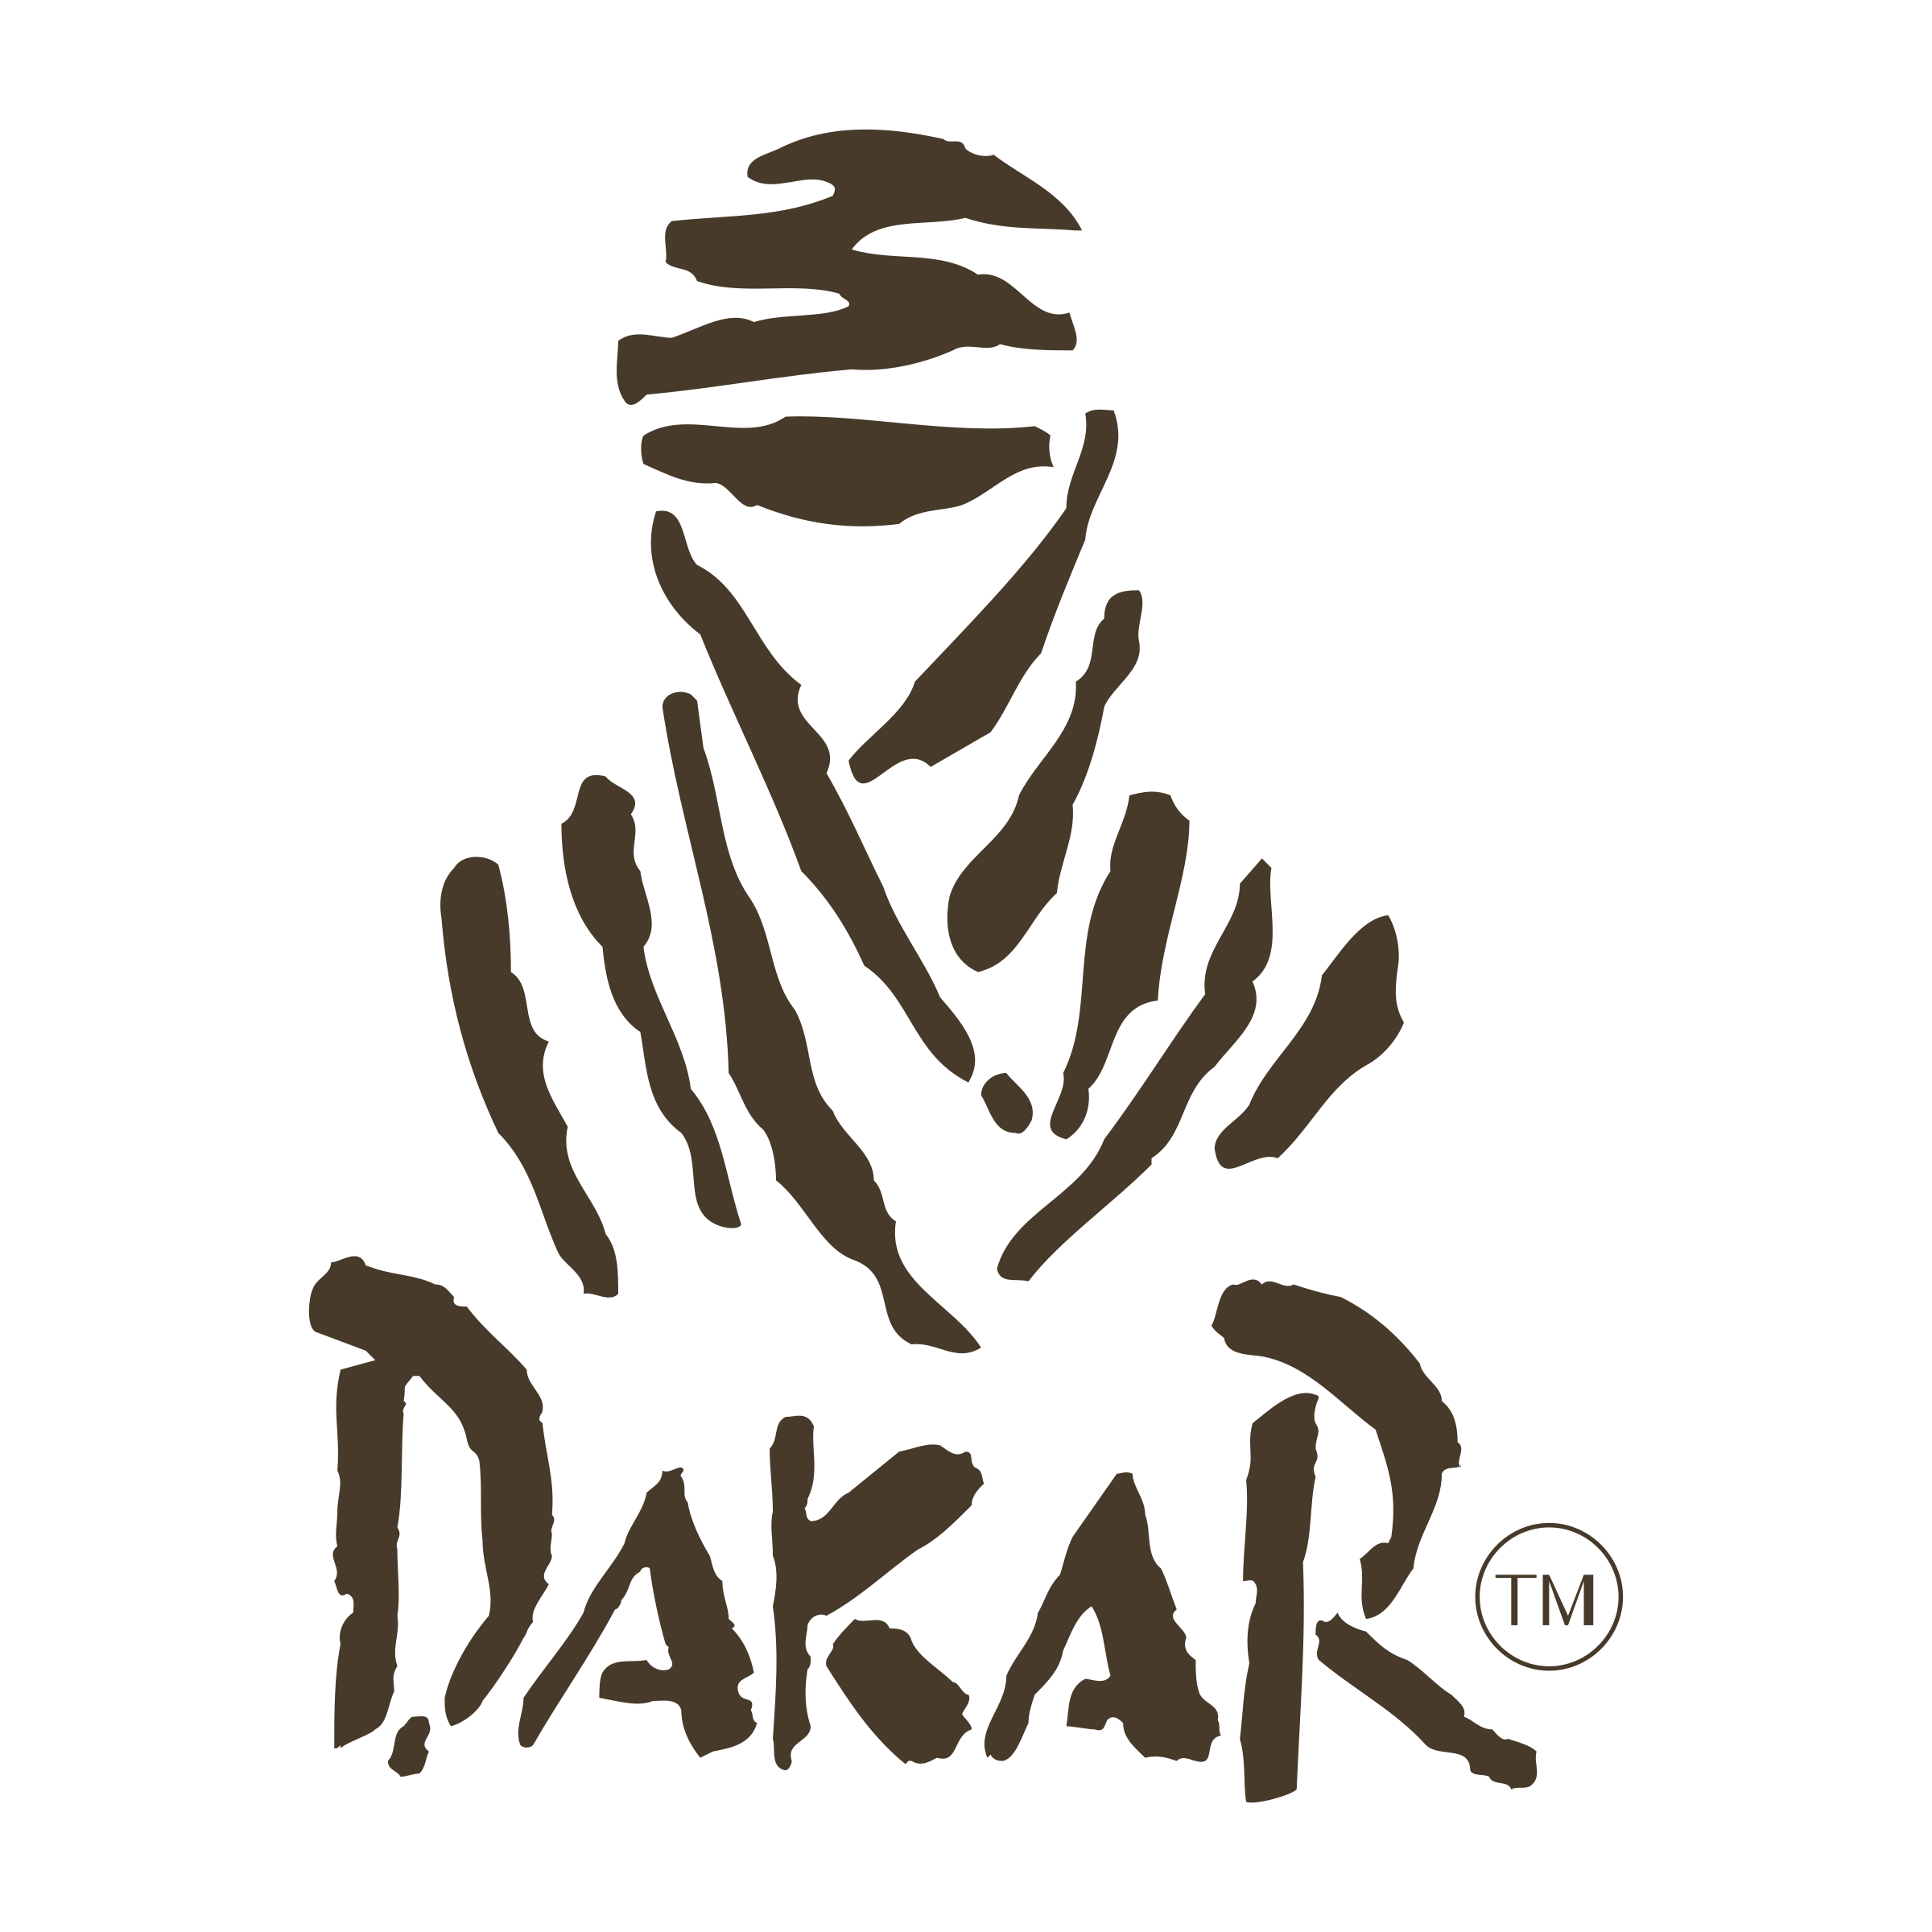 Dakar Rally Logo Vector~ Form